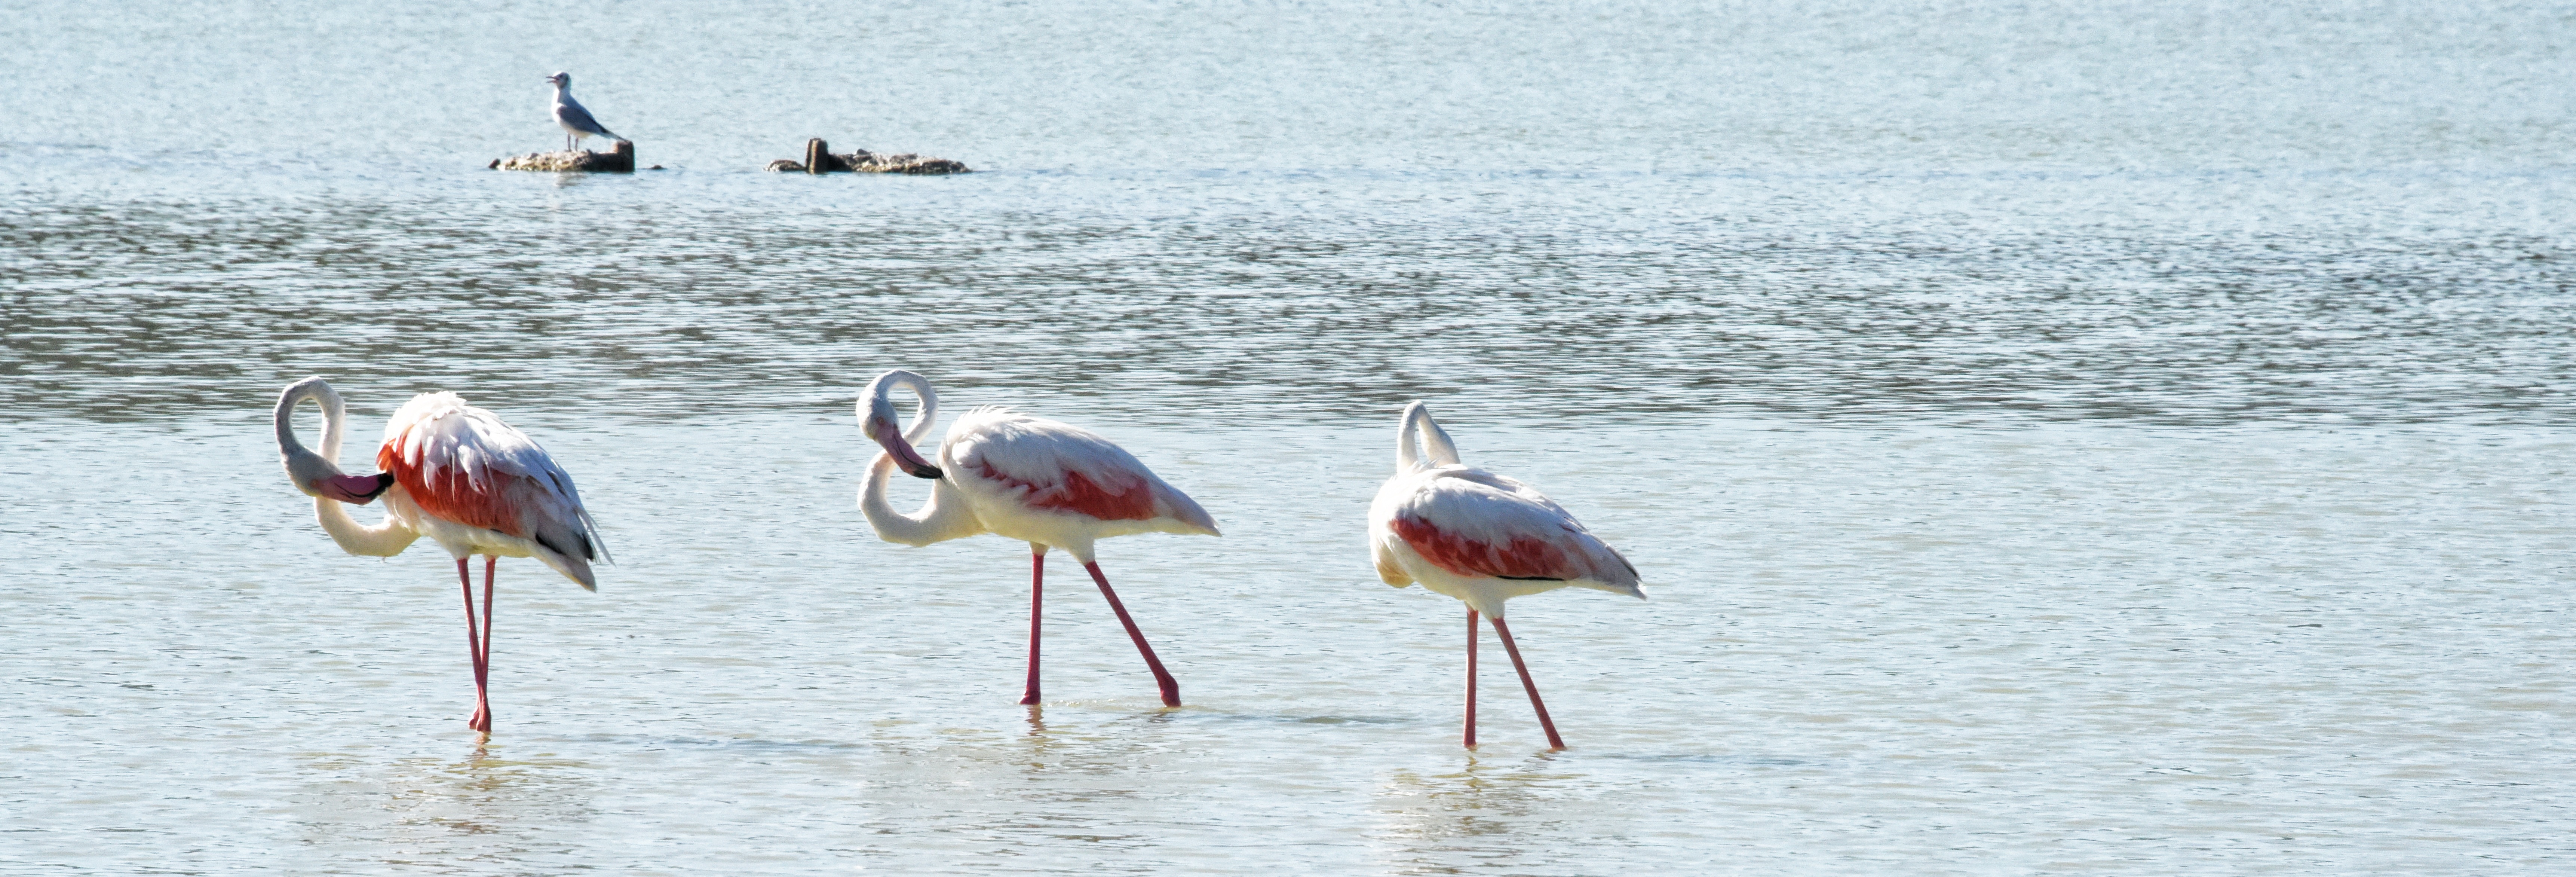 3 flamingo birds